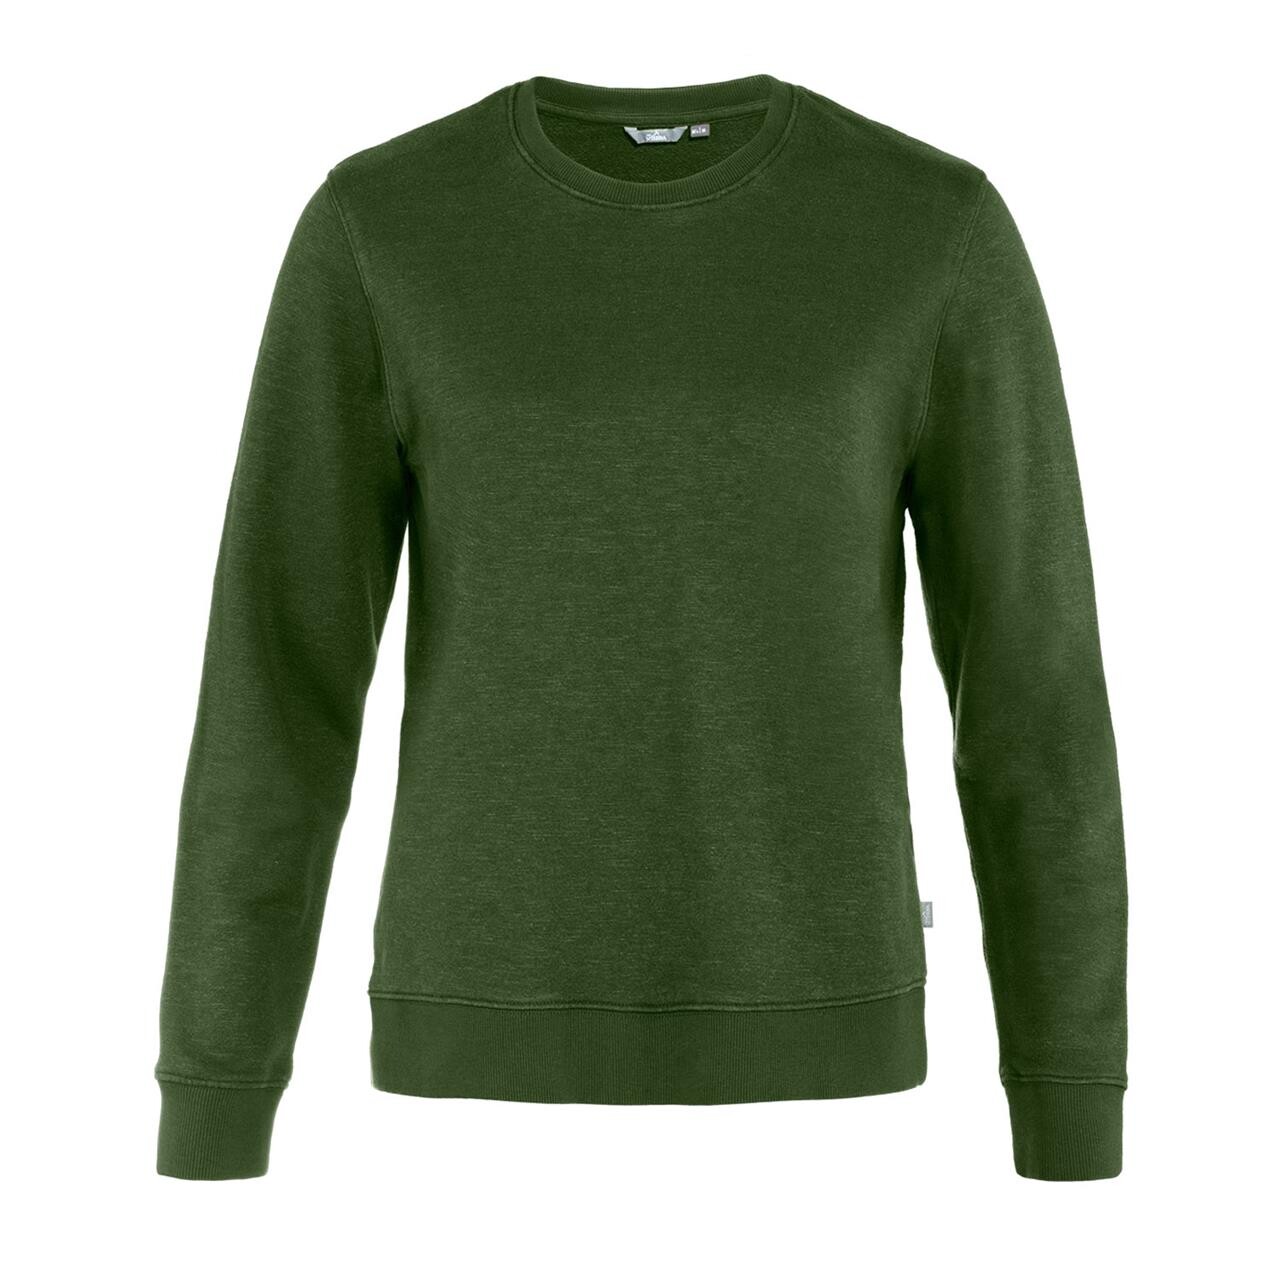 #2 - Tierra Womens Hempy Sweater  (Grøn (MOSS GREEN) X-large)